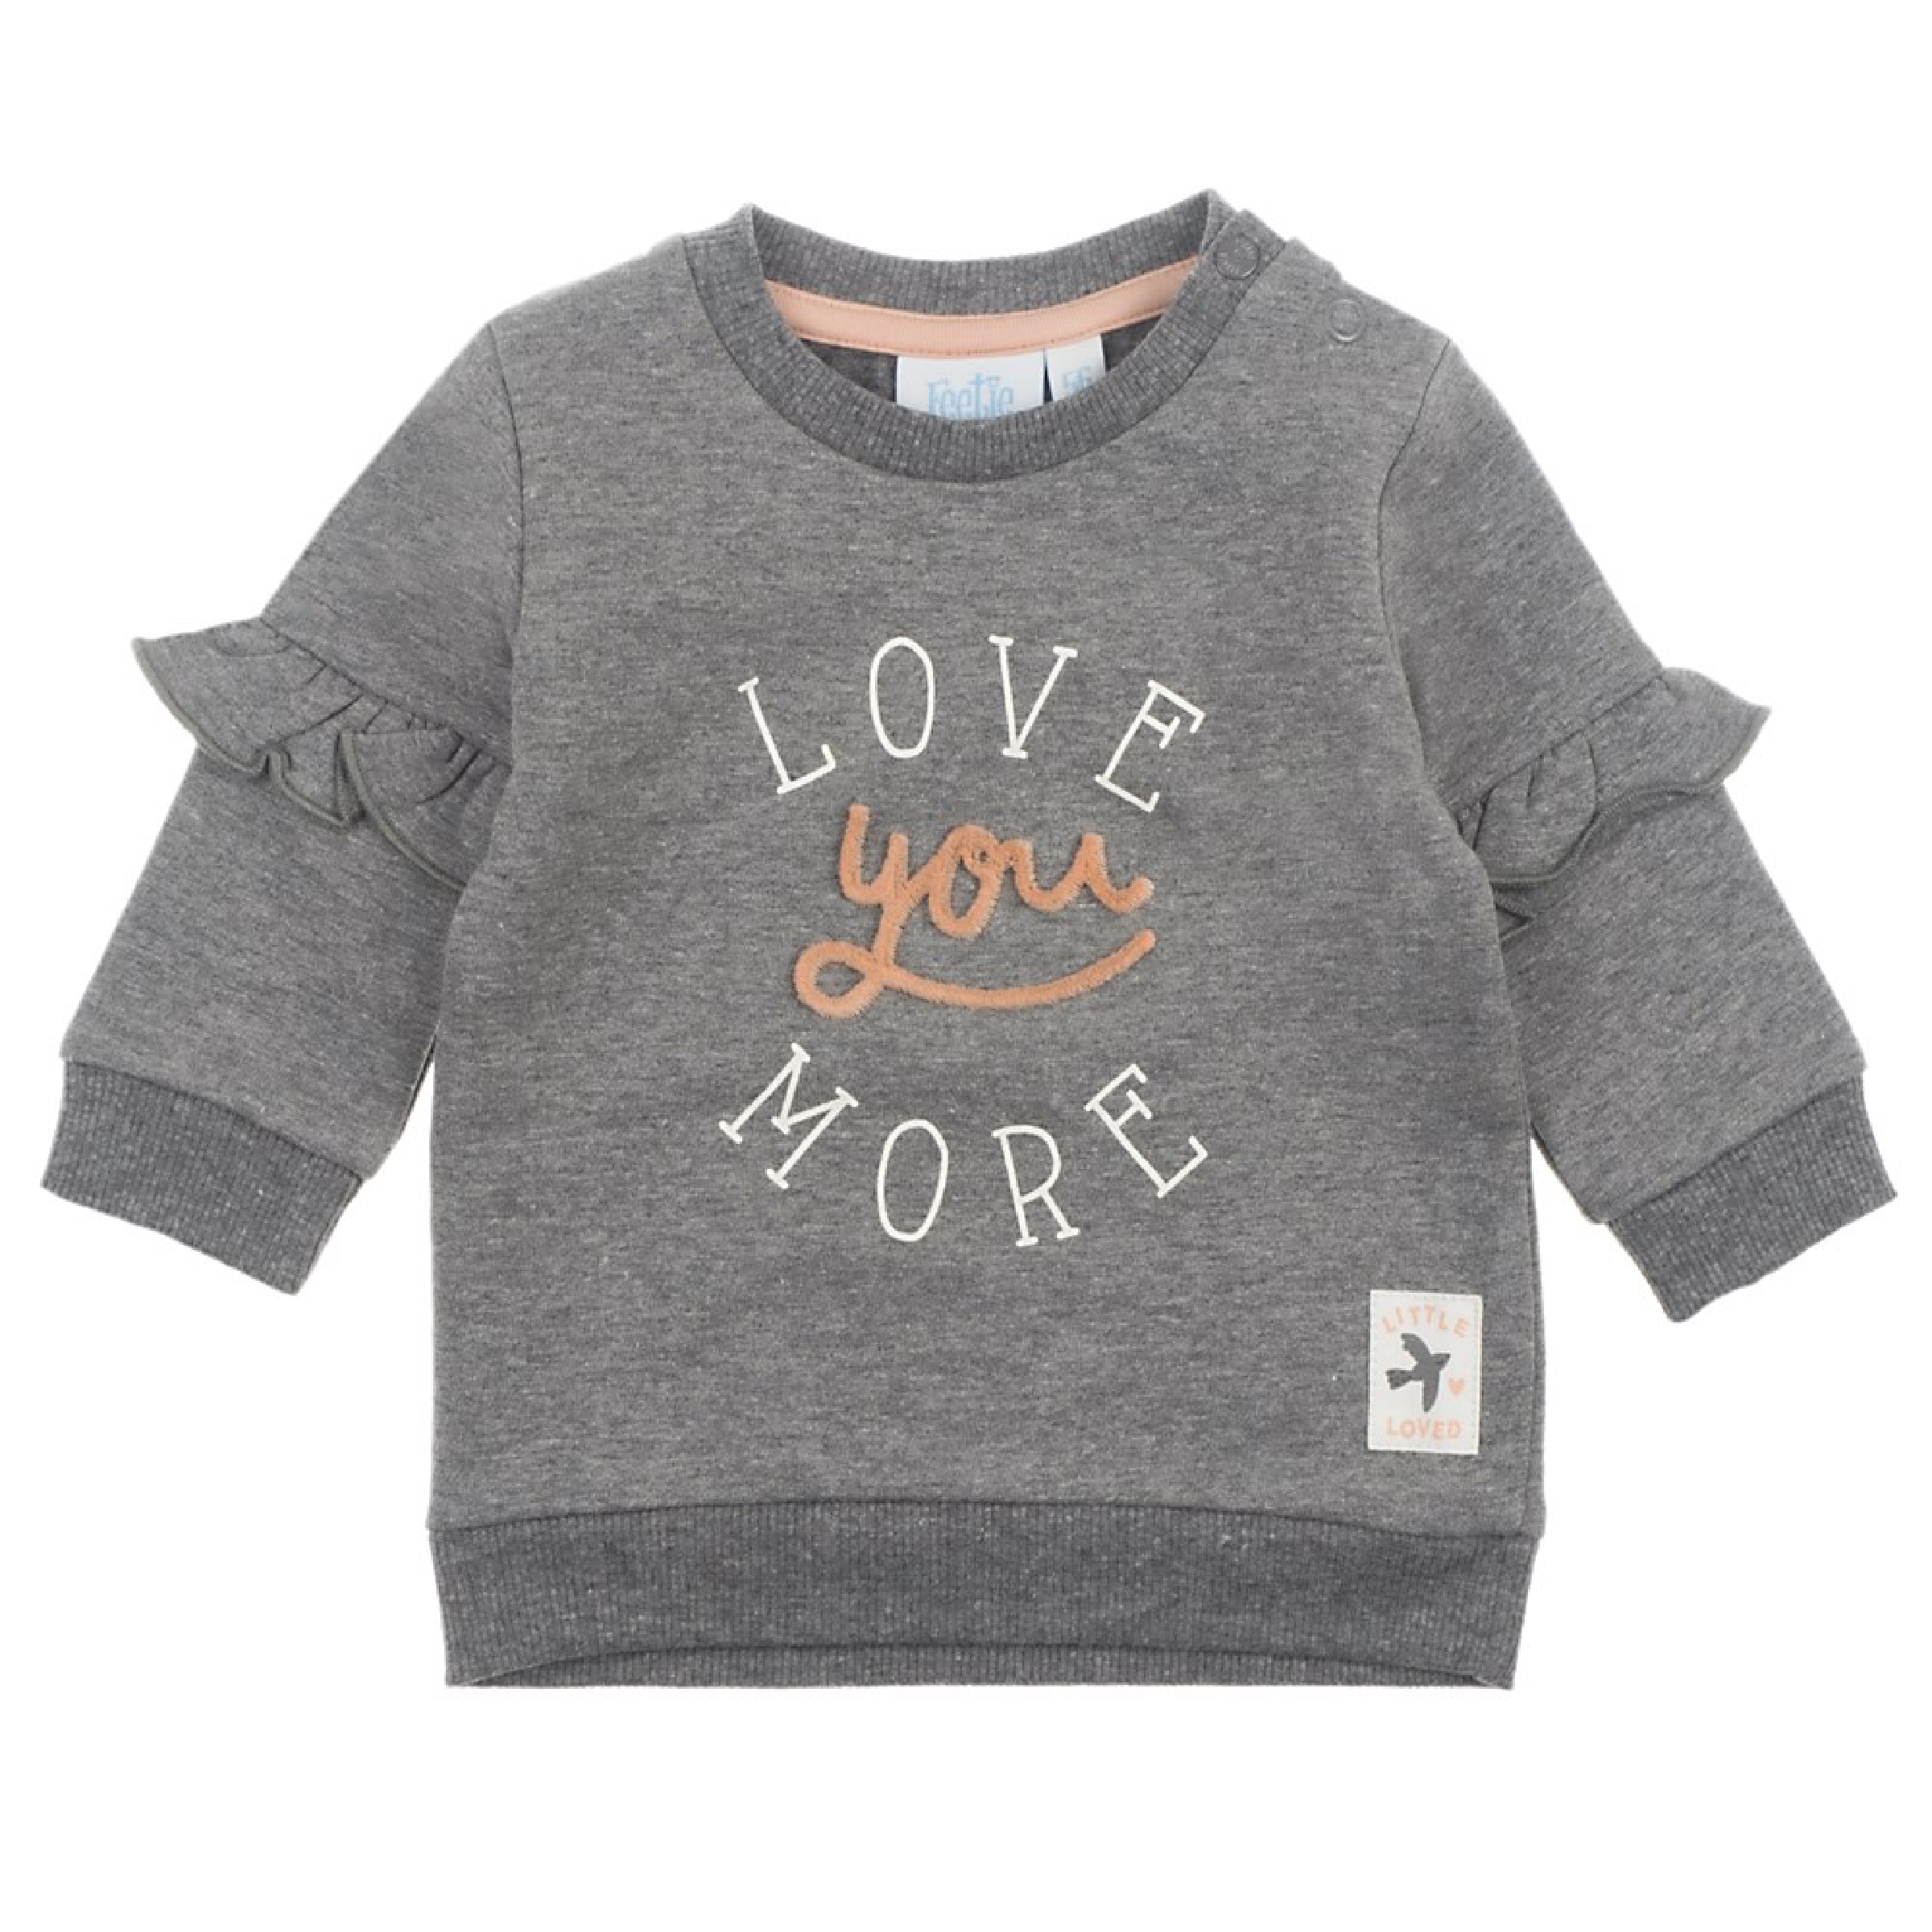 Meisjes Sweater Love You - Little and Loved van Feetje in de kleur Antraciet melange in maat 68.